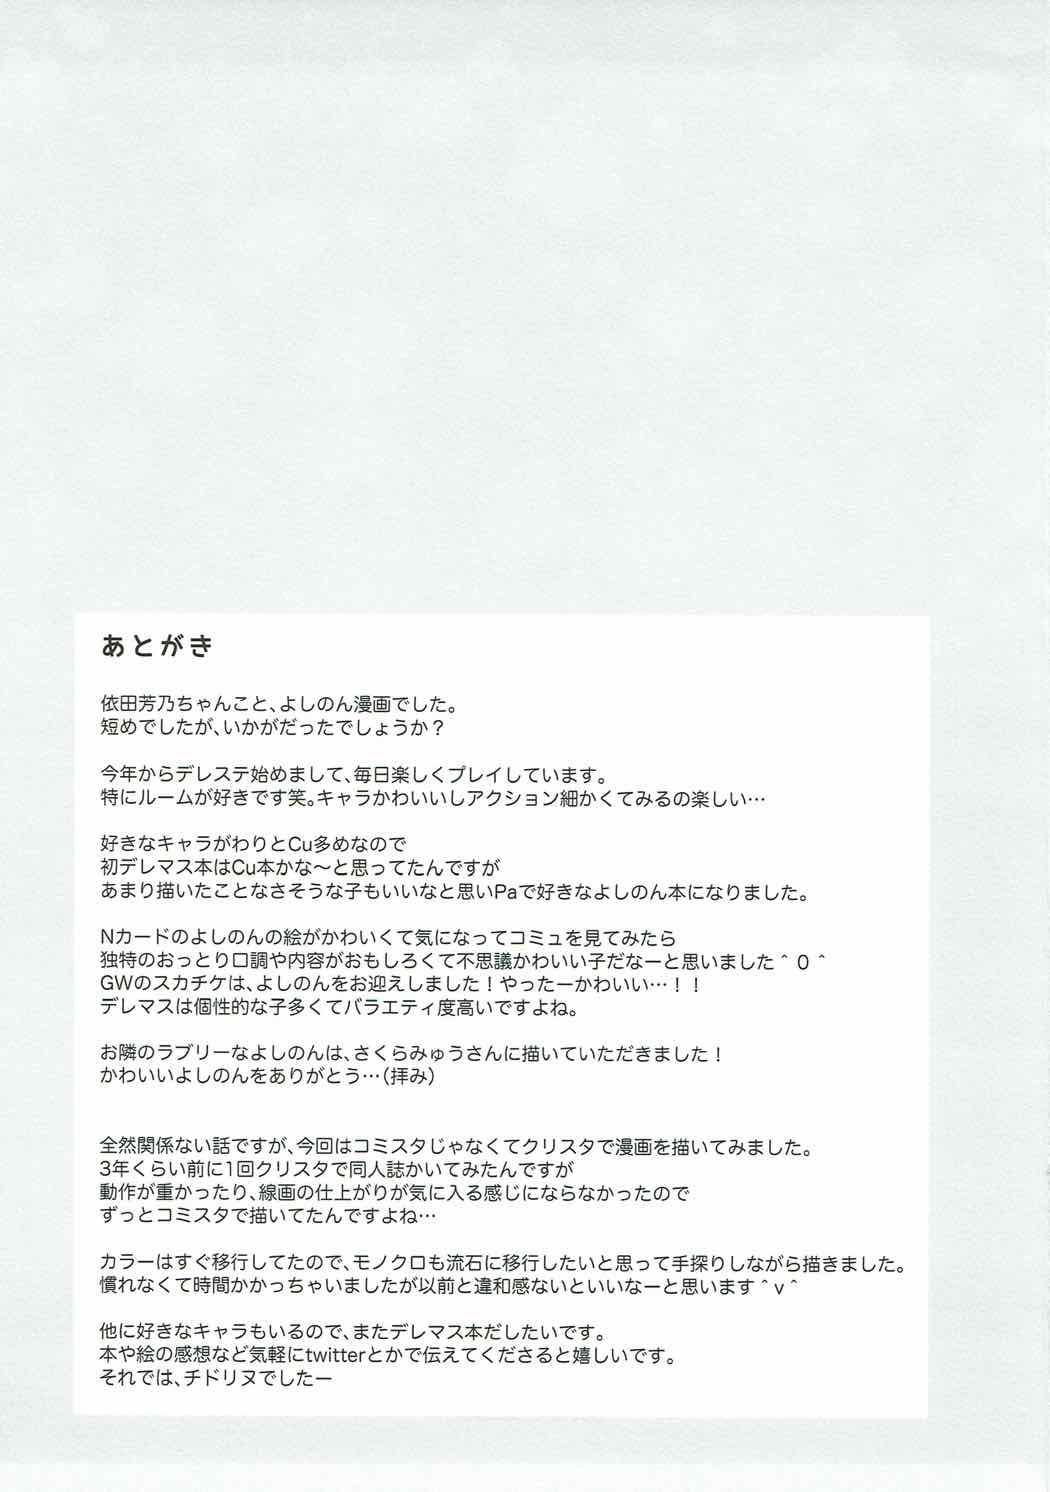 (C92) [Chidorinu] Sakura Perfume (THE IDOLM@STER CINDERELLA GIRLS) (C92) [チドルヌ] 桜Perfume (アイドルマスター シンデレラガールズ)